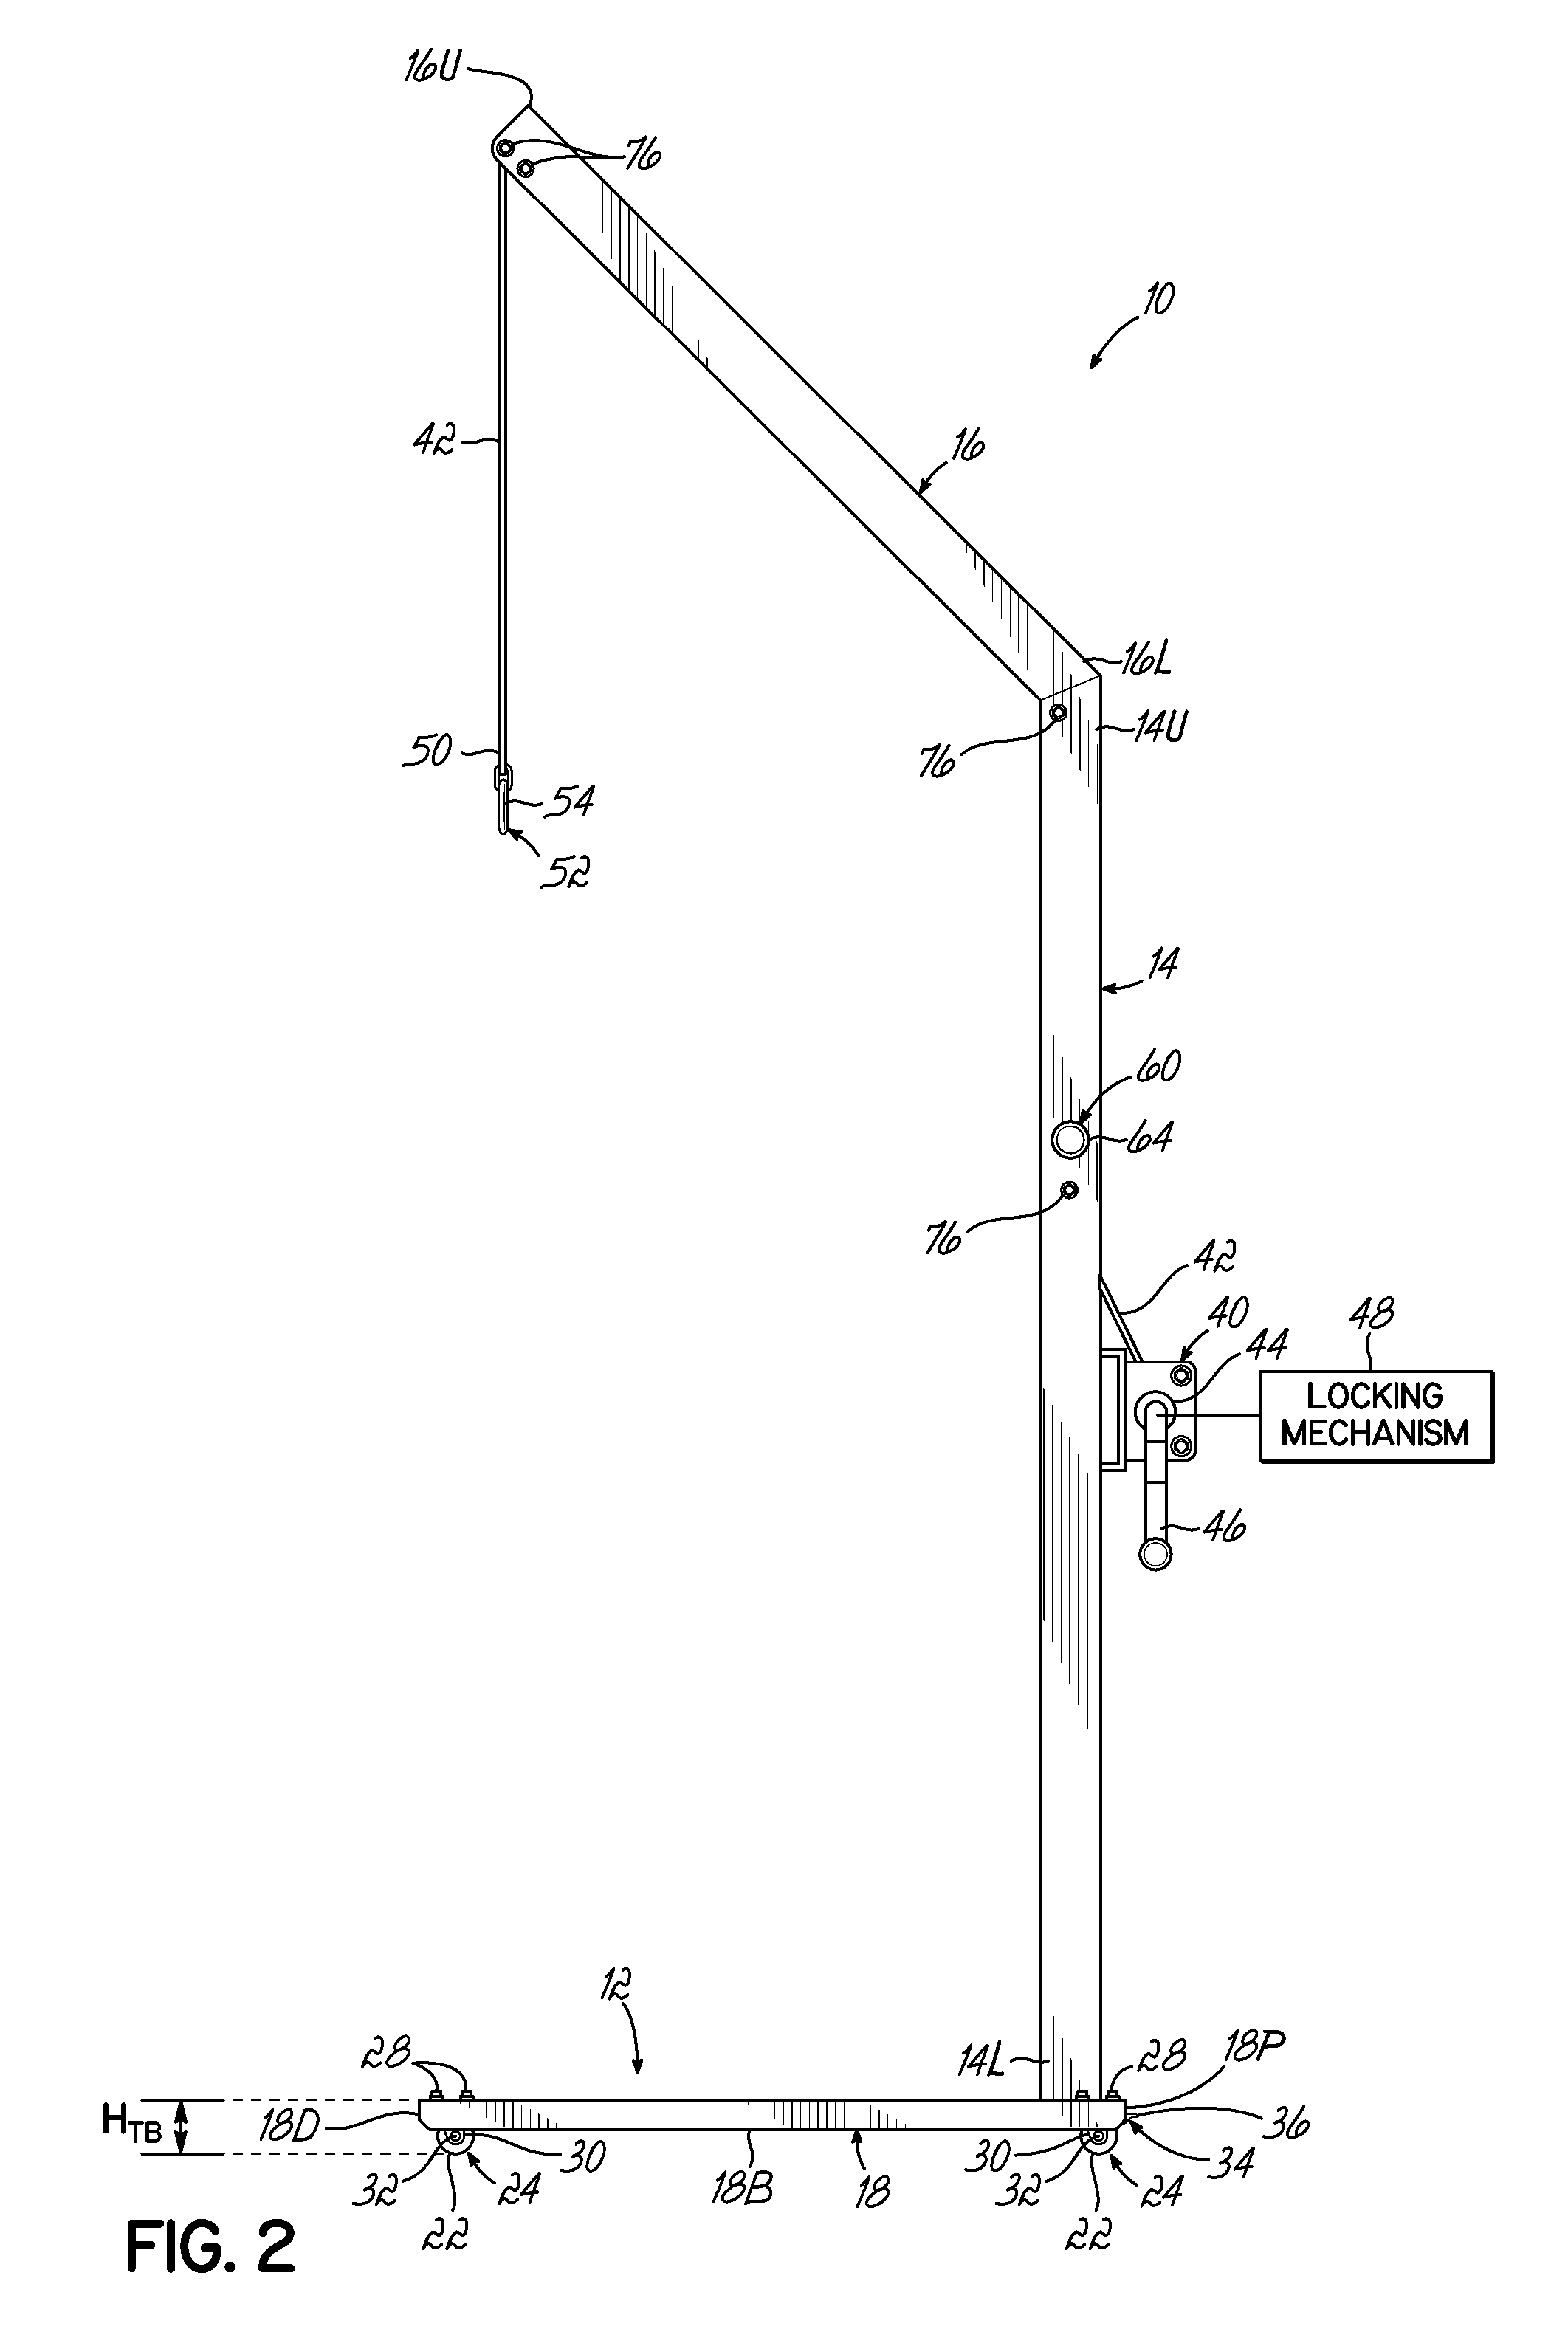 Method for retrieving storage racks from a tank freezer using a retrieval crane, and related combinations